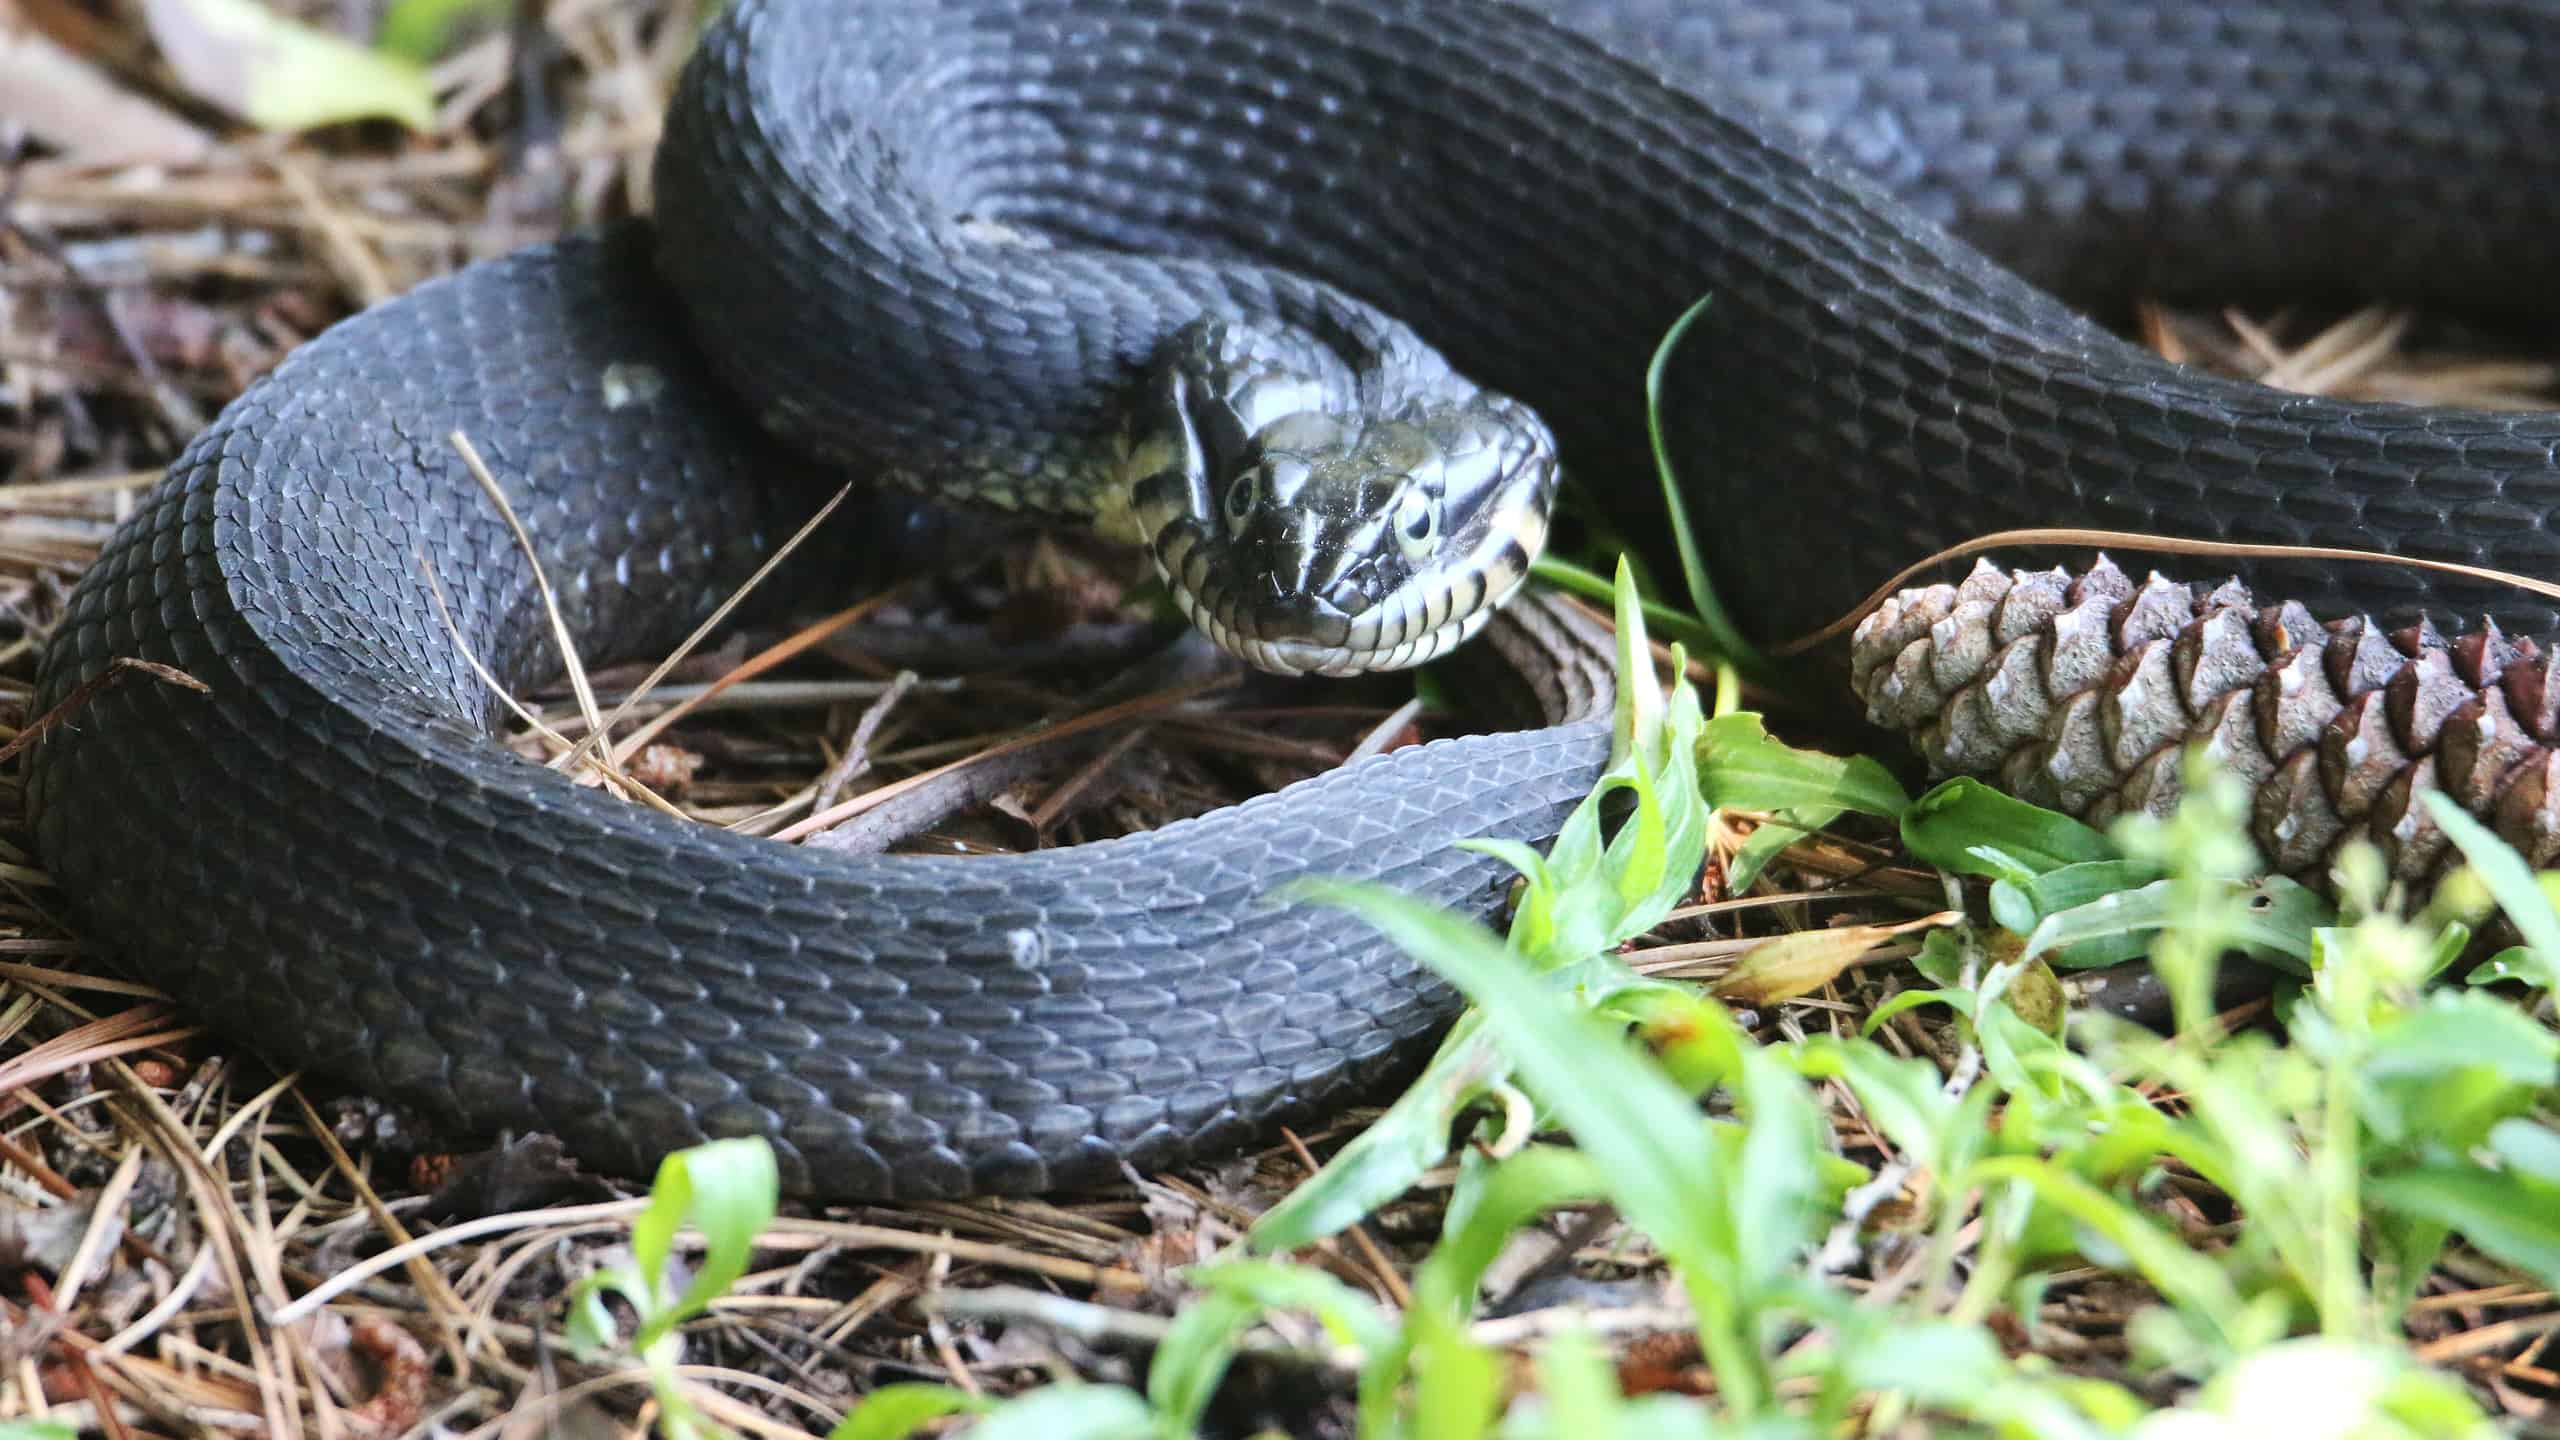 North Carolina Zoo on X: A snake playing possum? Eastern hognose